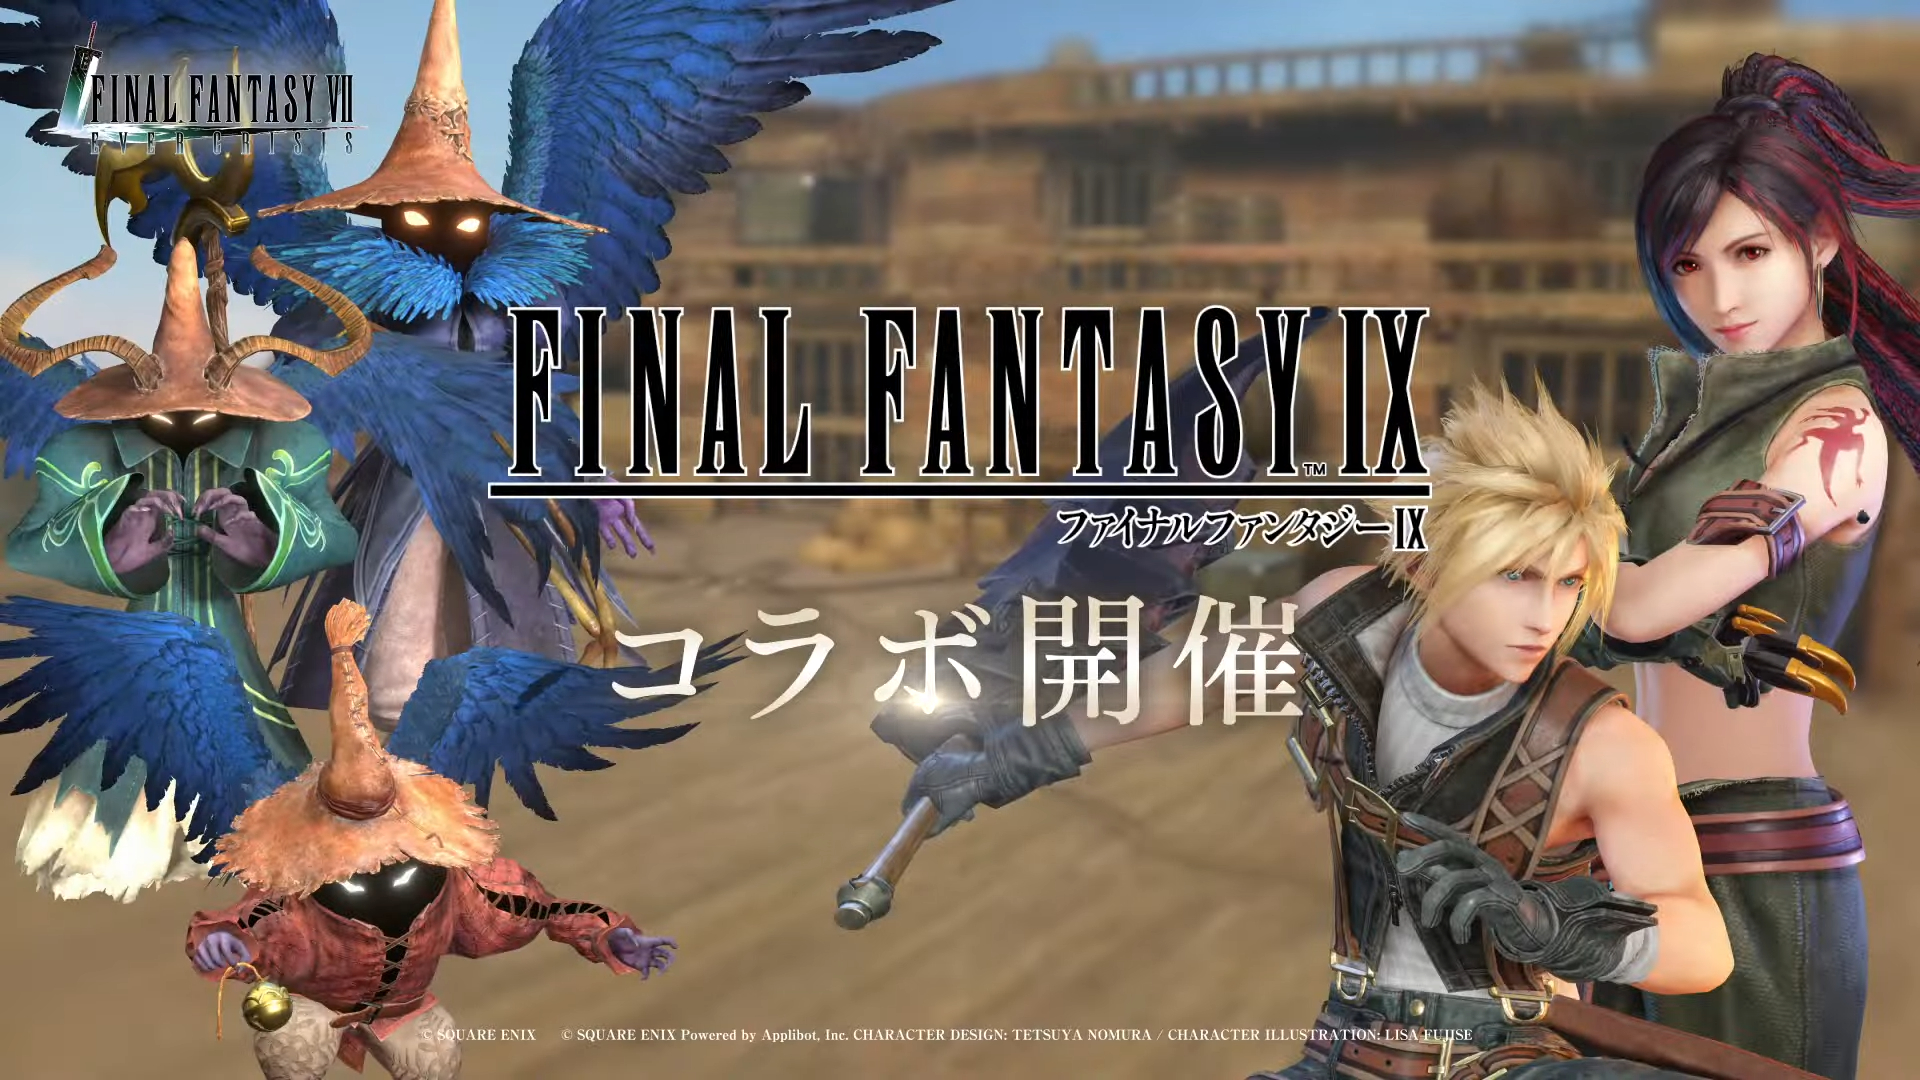 Review in Progress: Final Fantasy 7: Ever Crisis